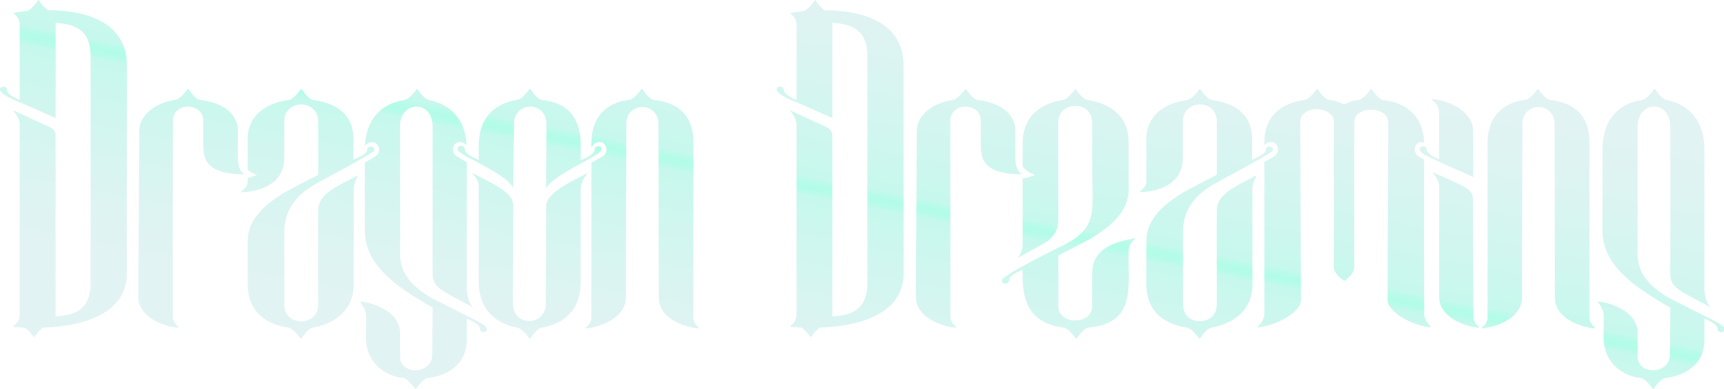 Dragon Dreaming Festival